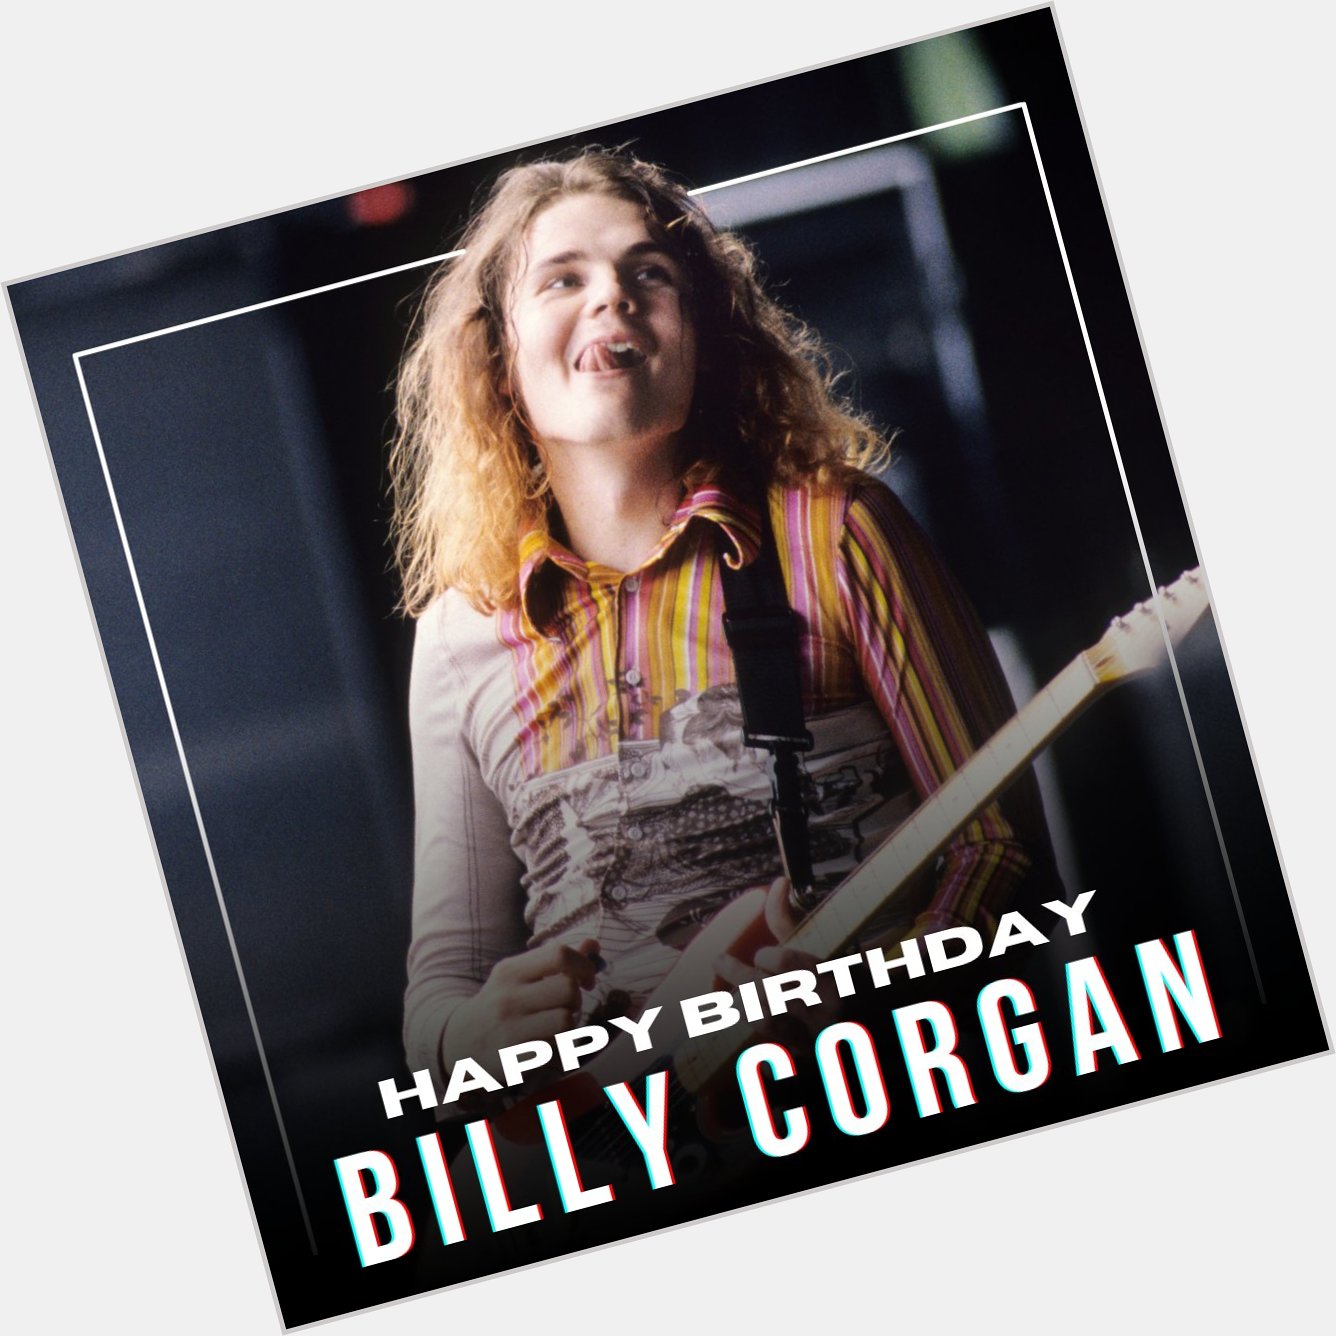 Happy birthday to Billy Corgan! 